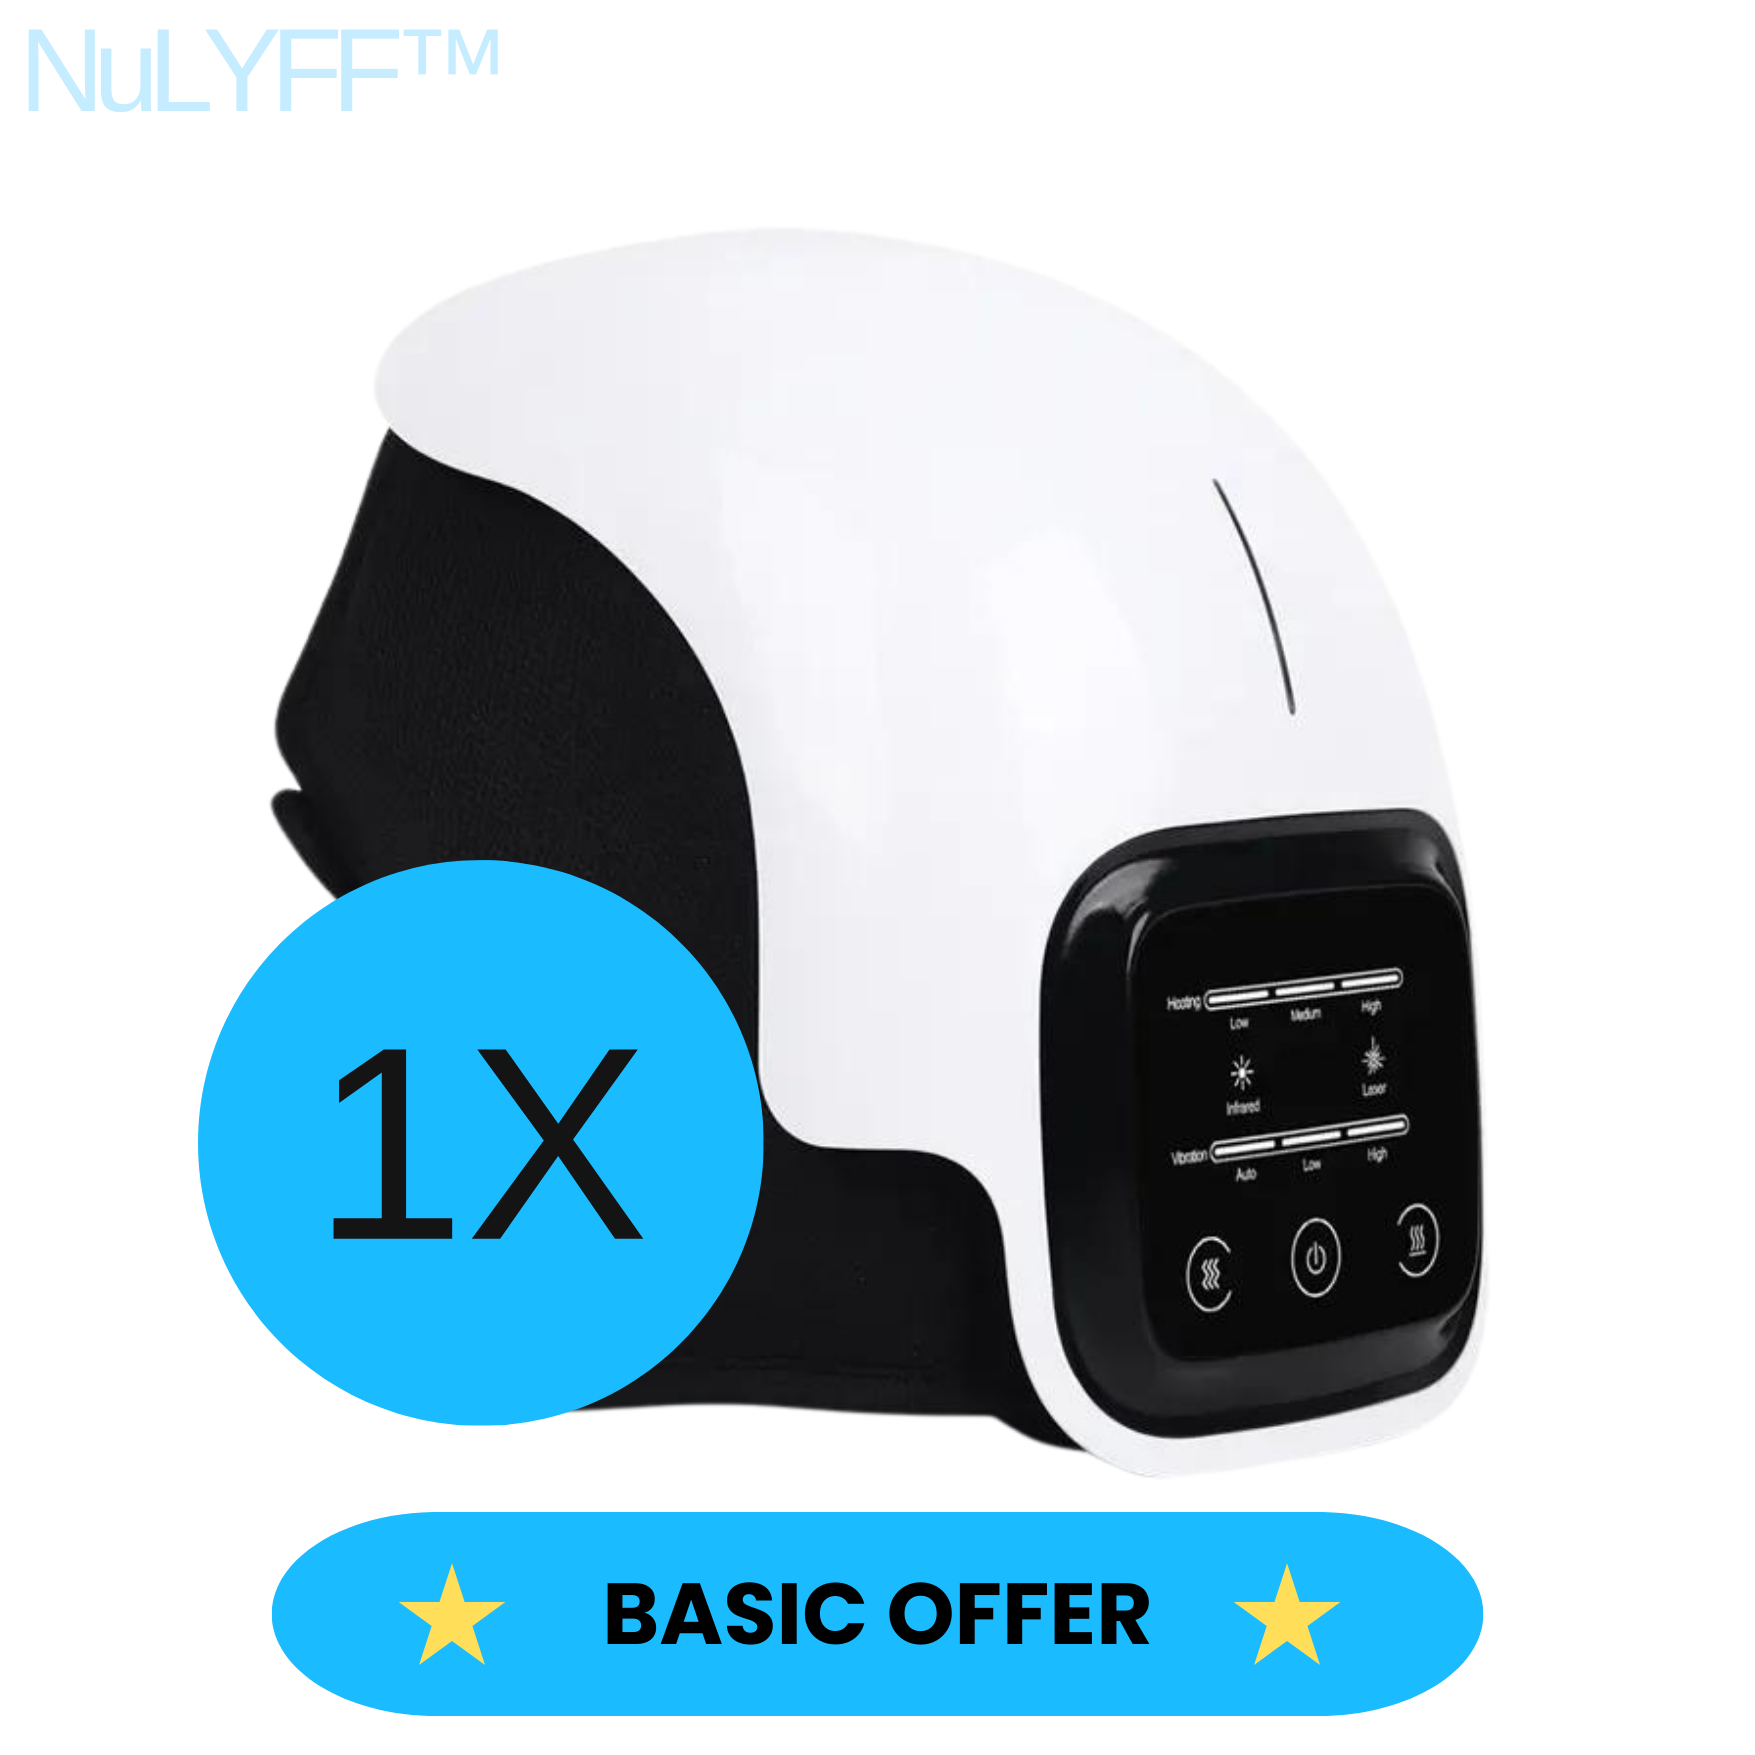 Image of 1X single unit NuLYFF™ Knee Massager basic offer, free shipping, 30 day money back guarantee